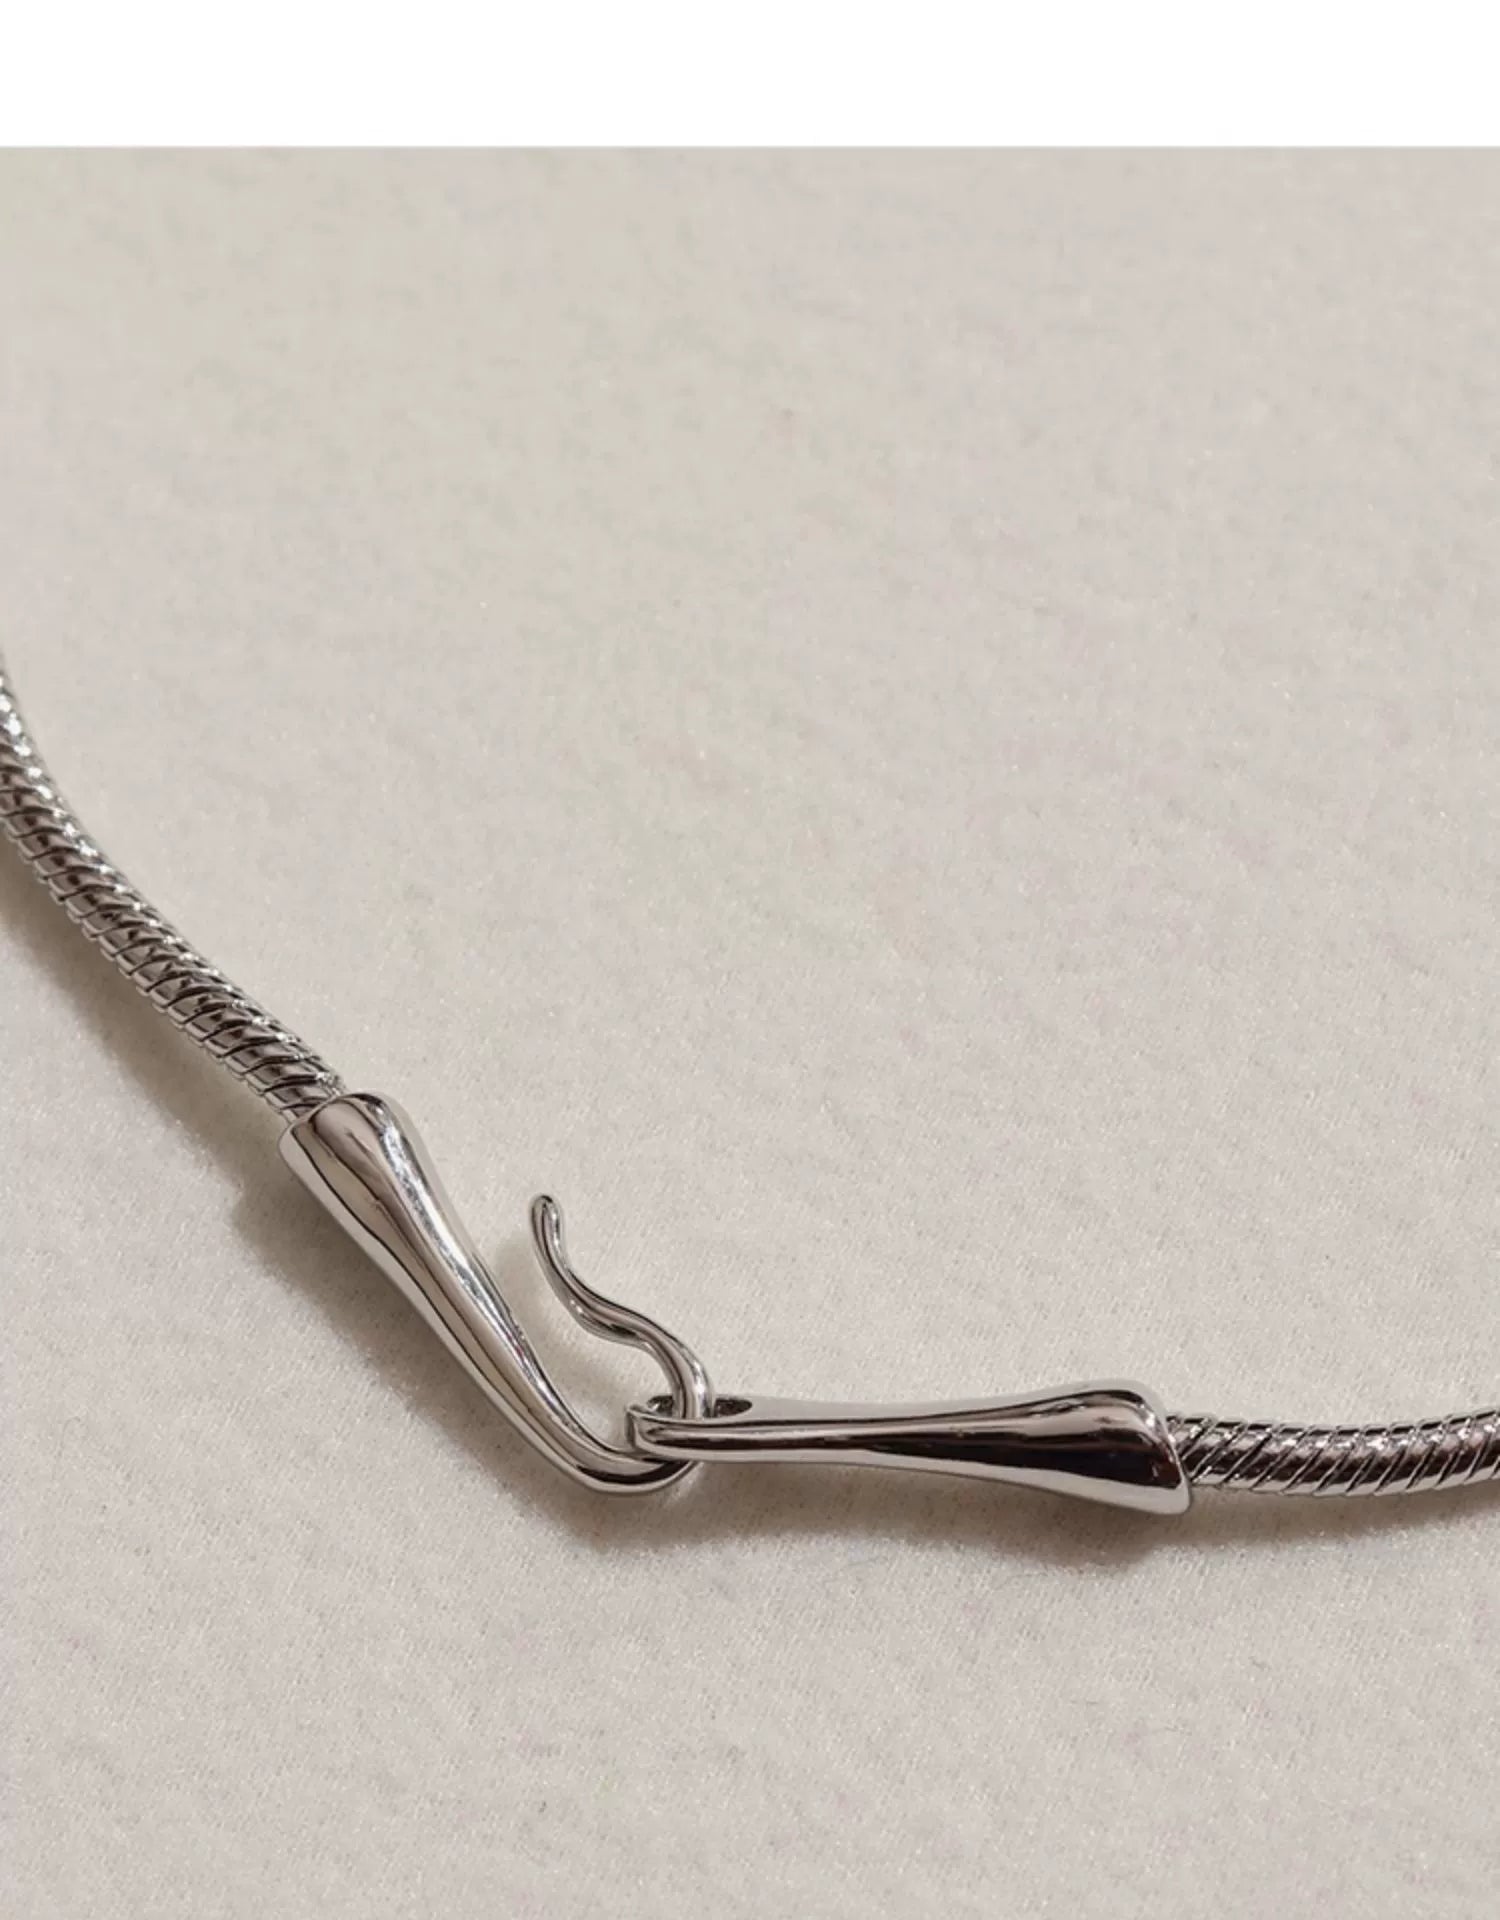 Hardware Hook Pendant Necklace Gold & Silver